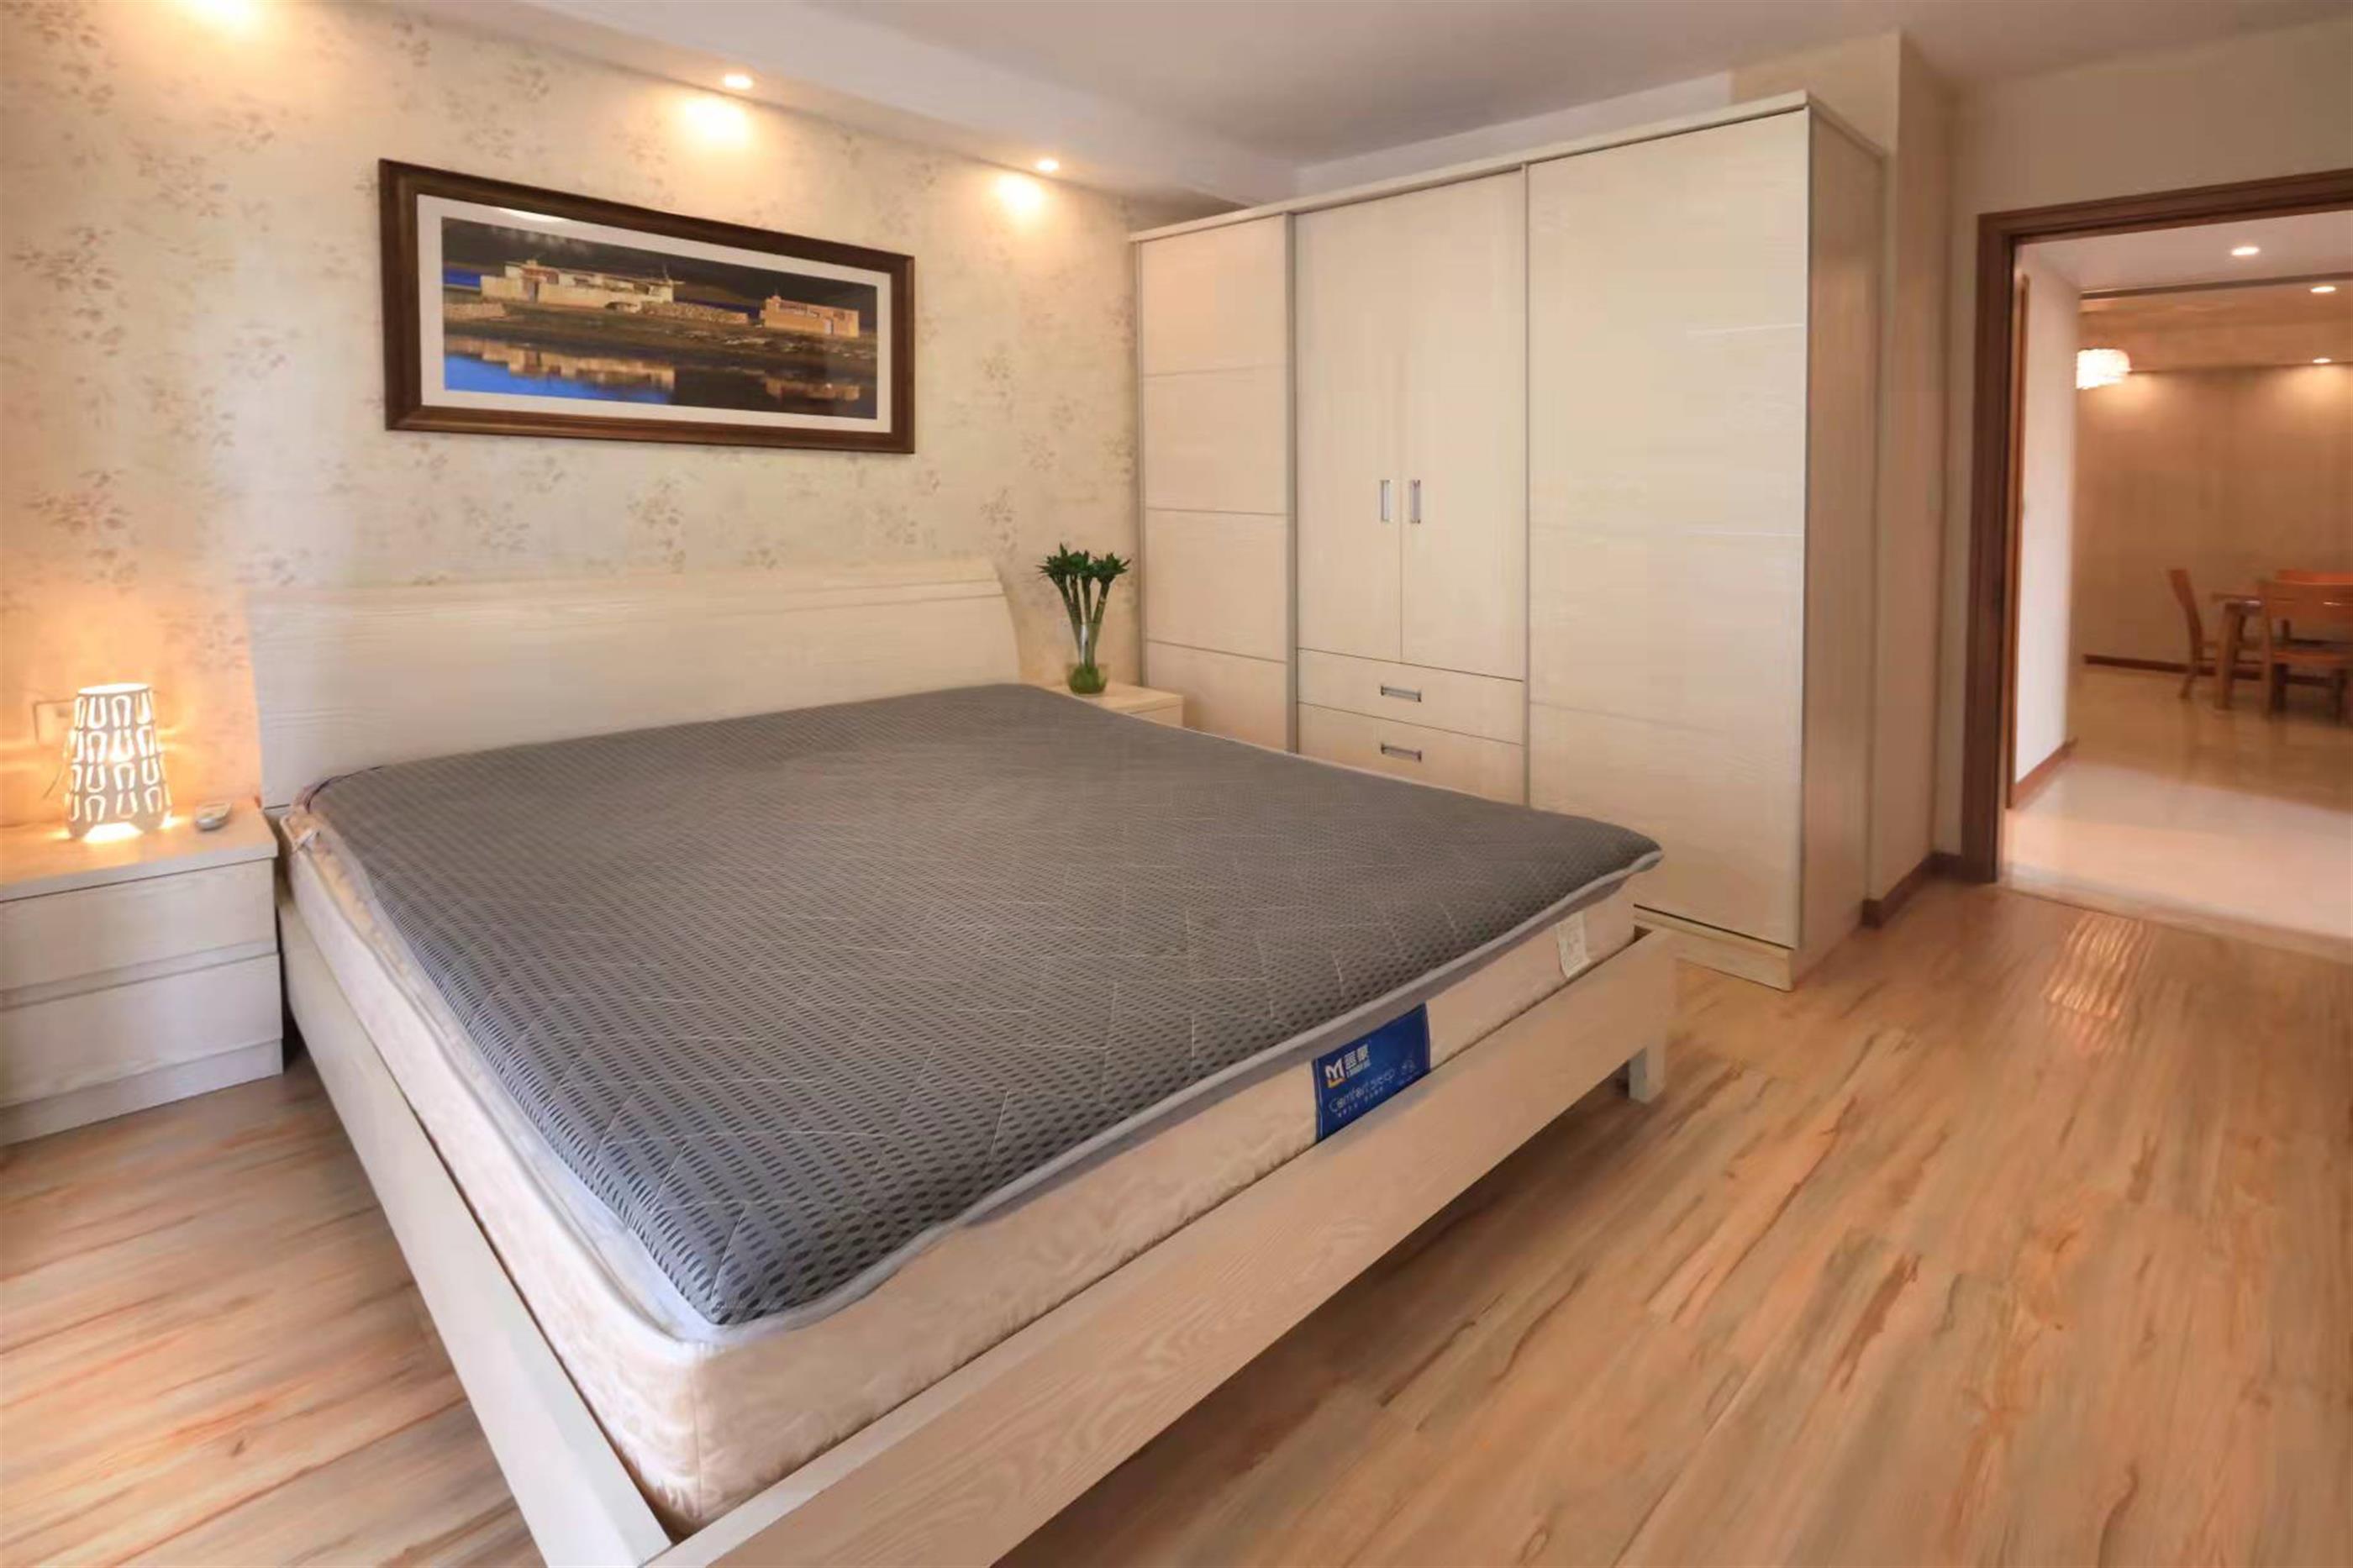 New mattress Spacious Modern Xintiandi 2BR for Rent in Shanghai